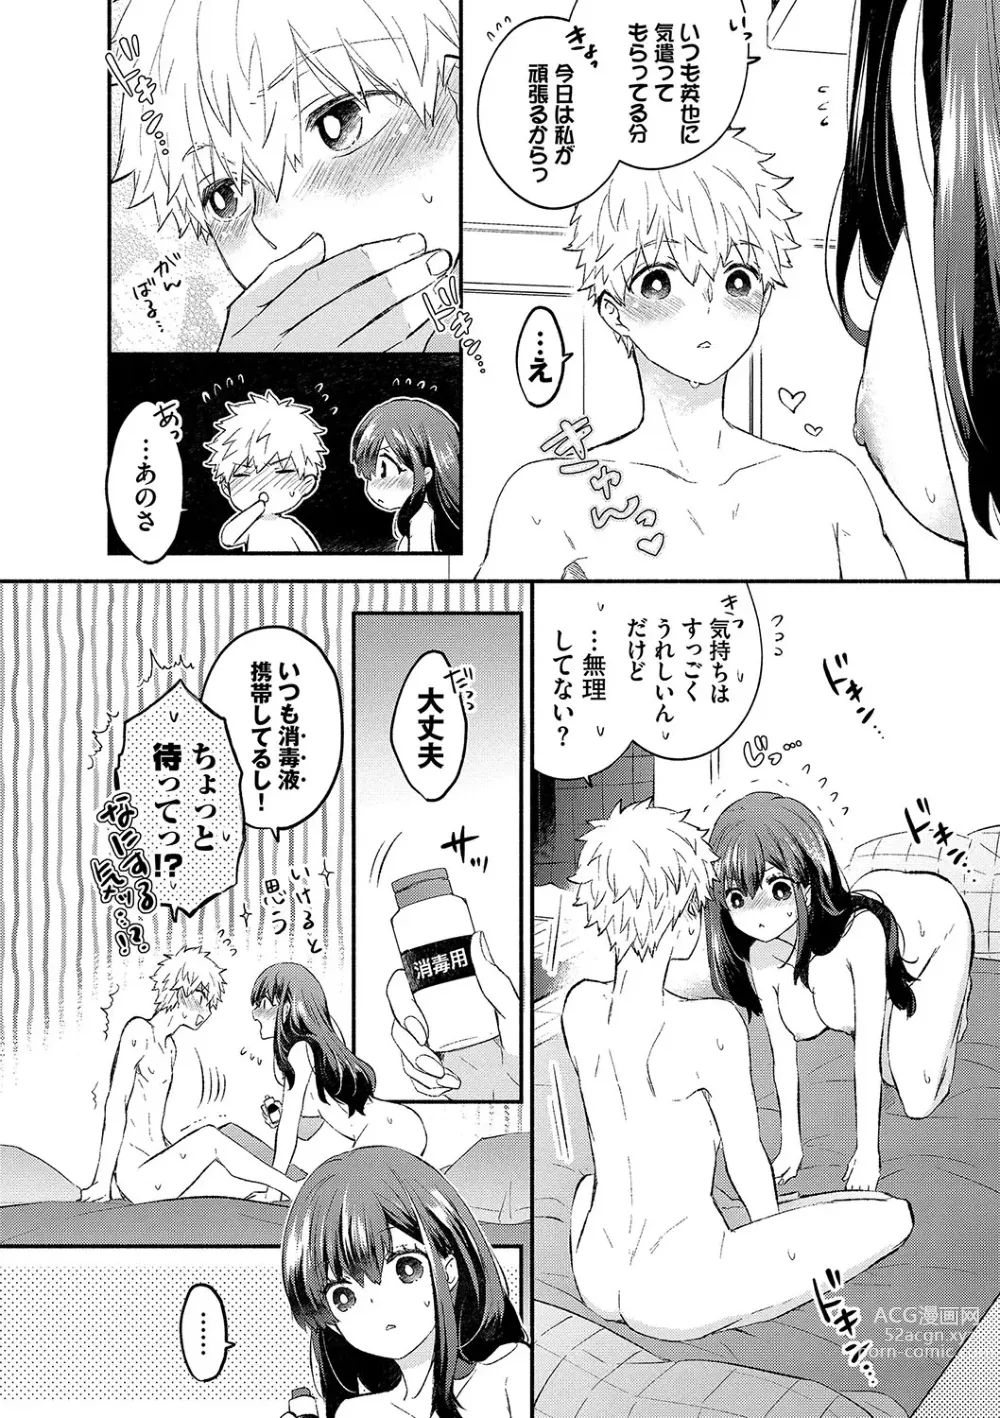 Page 9 of manga Junai Porno - Pure Love Porno